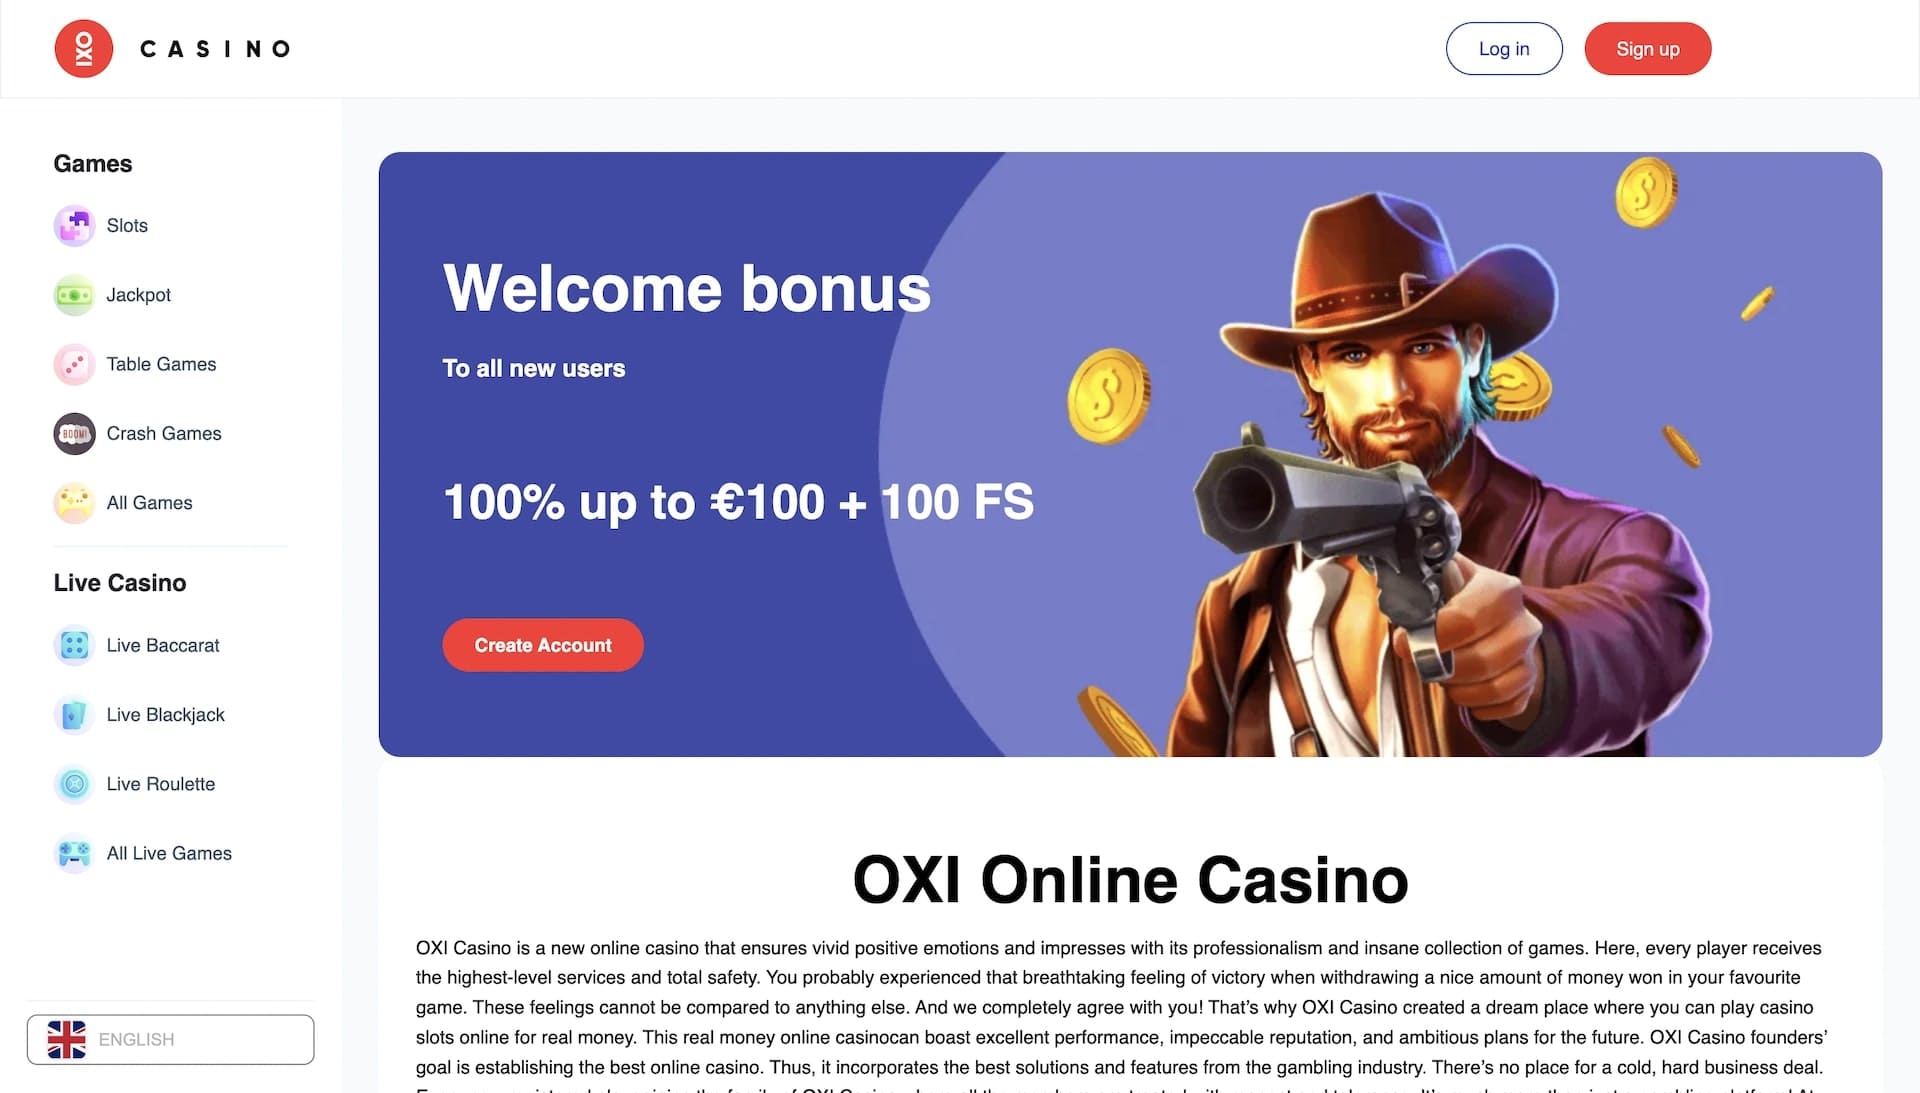 Official website of the Oxi Casino